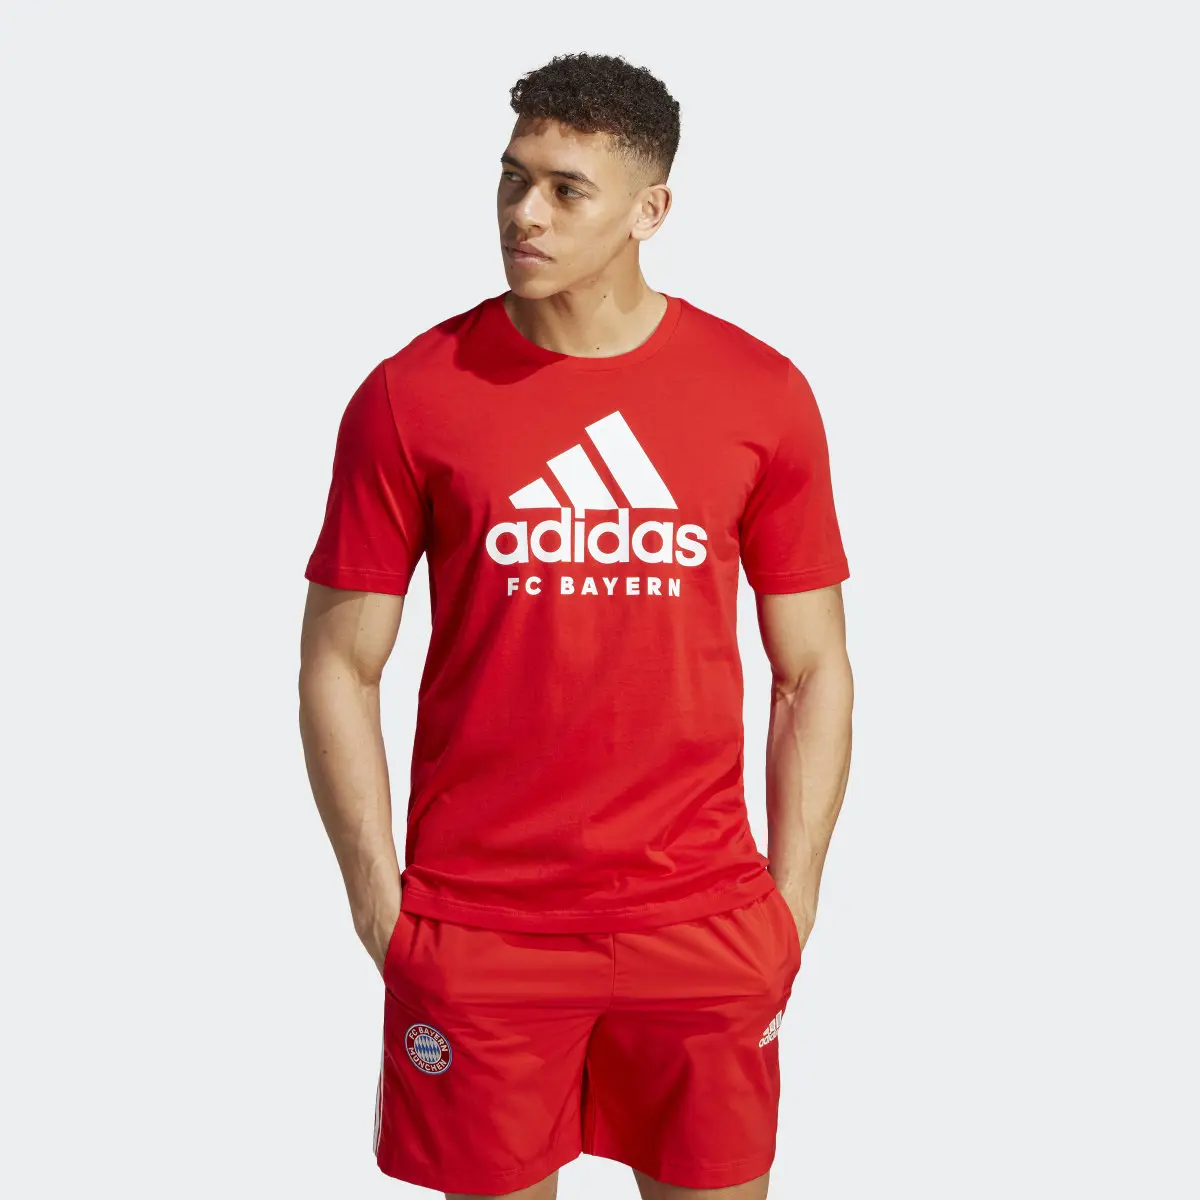 Adidas T-shirt DNA Graphic FC Bayern München. 2